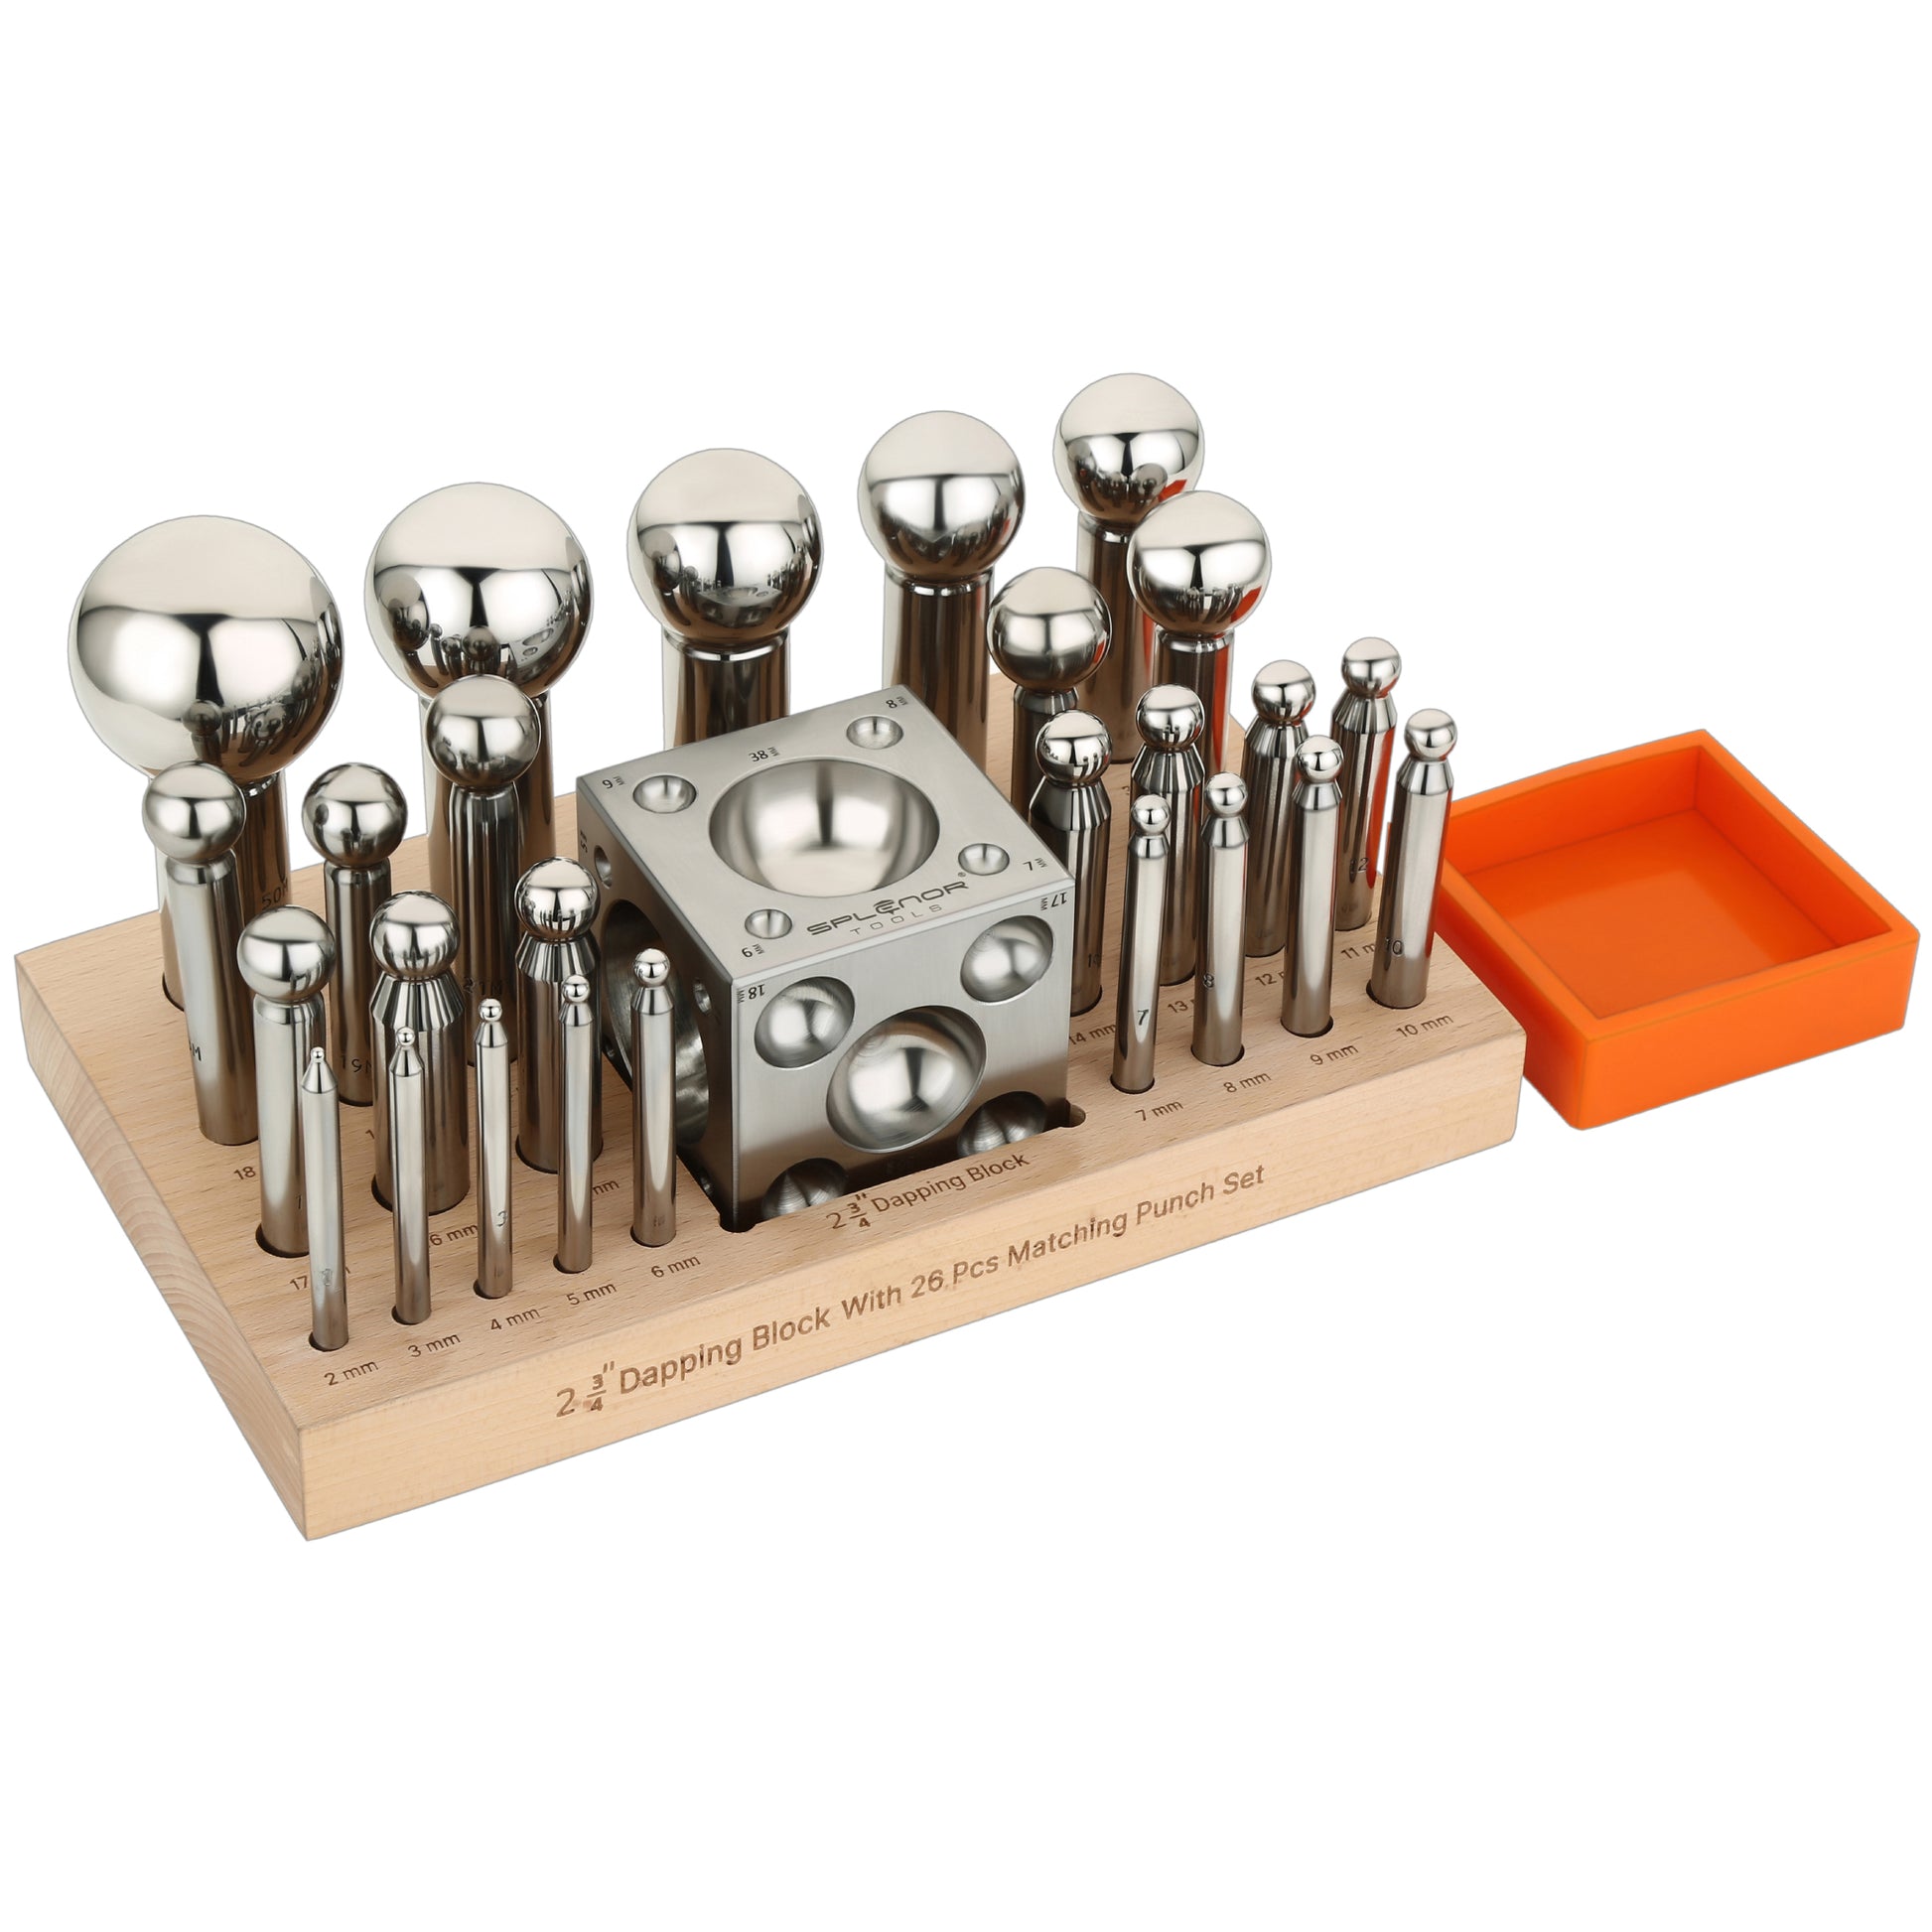 2.75 Dapping block & 26 punch set – Splenor tools